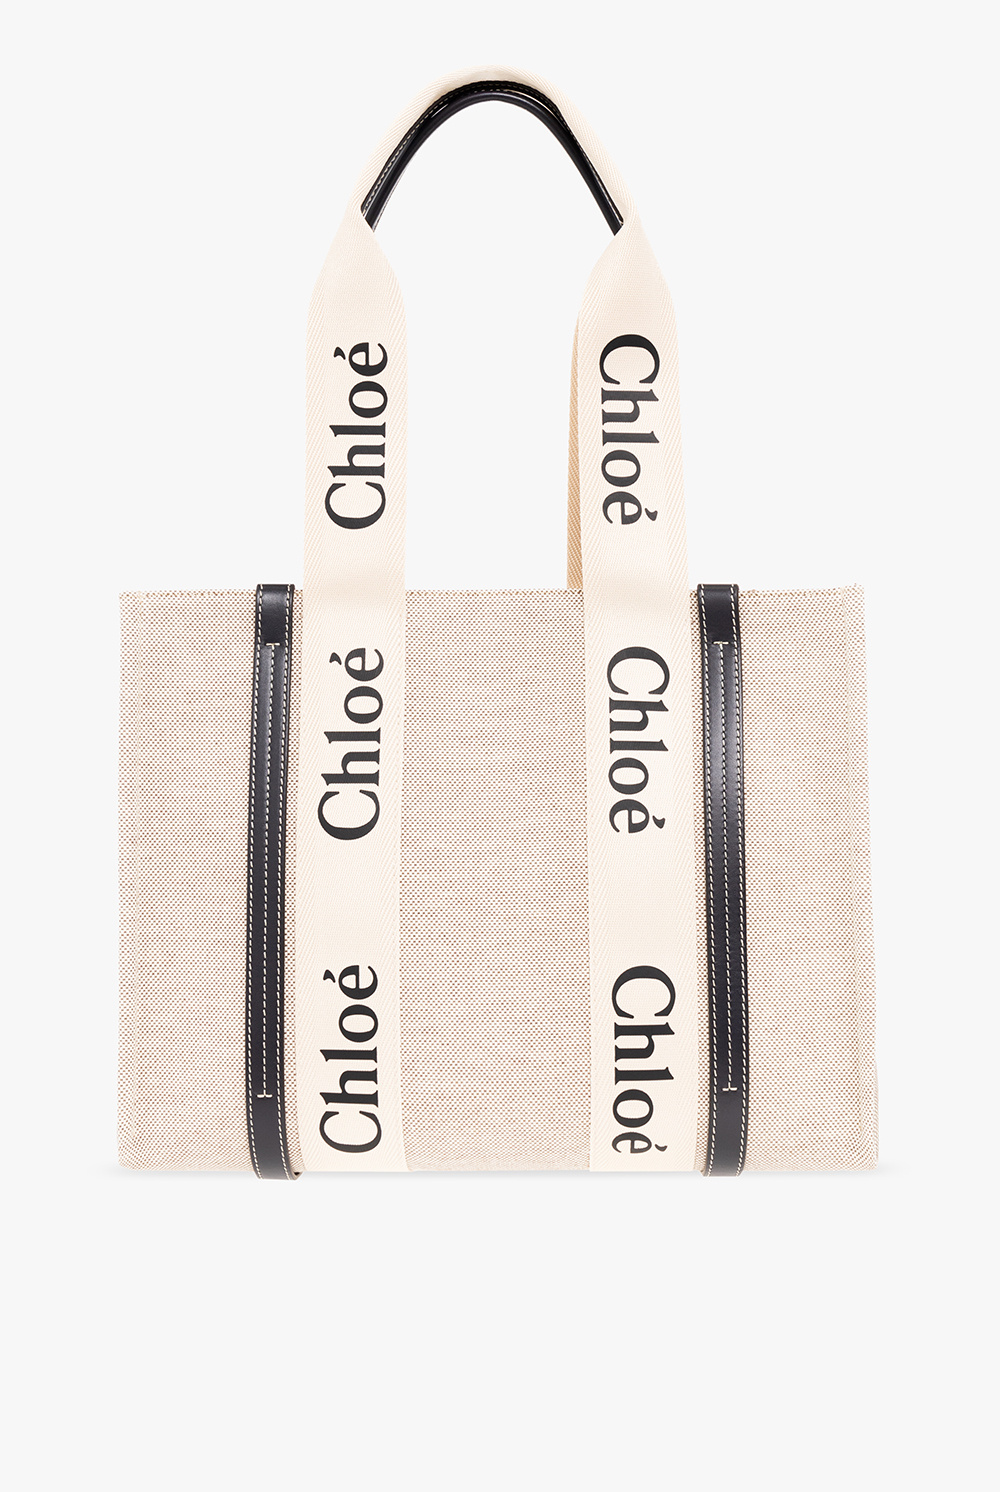 Chloé ‘Woody Medium’ shopper bag